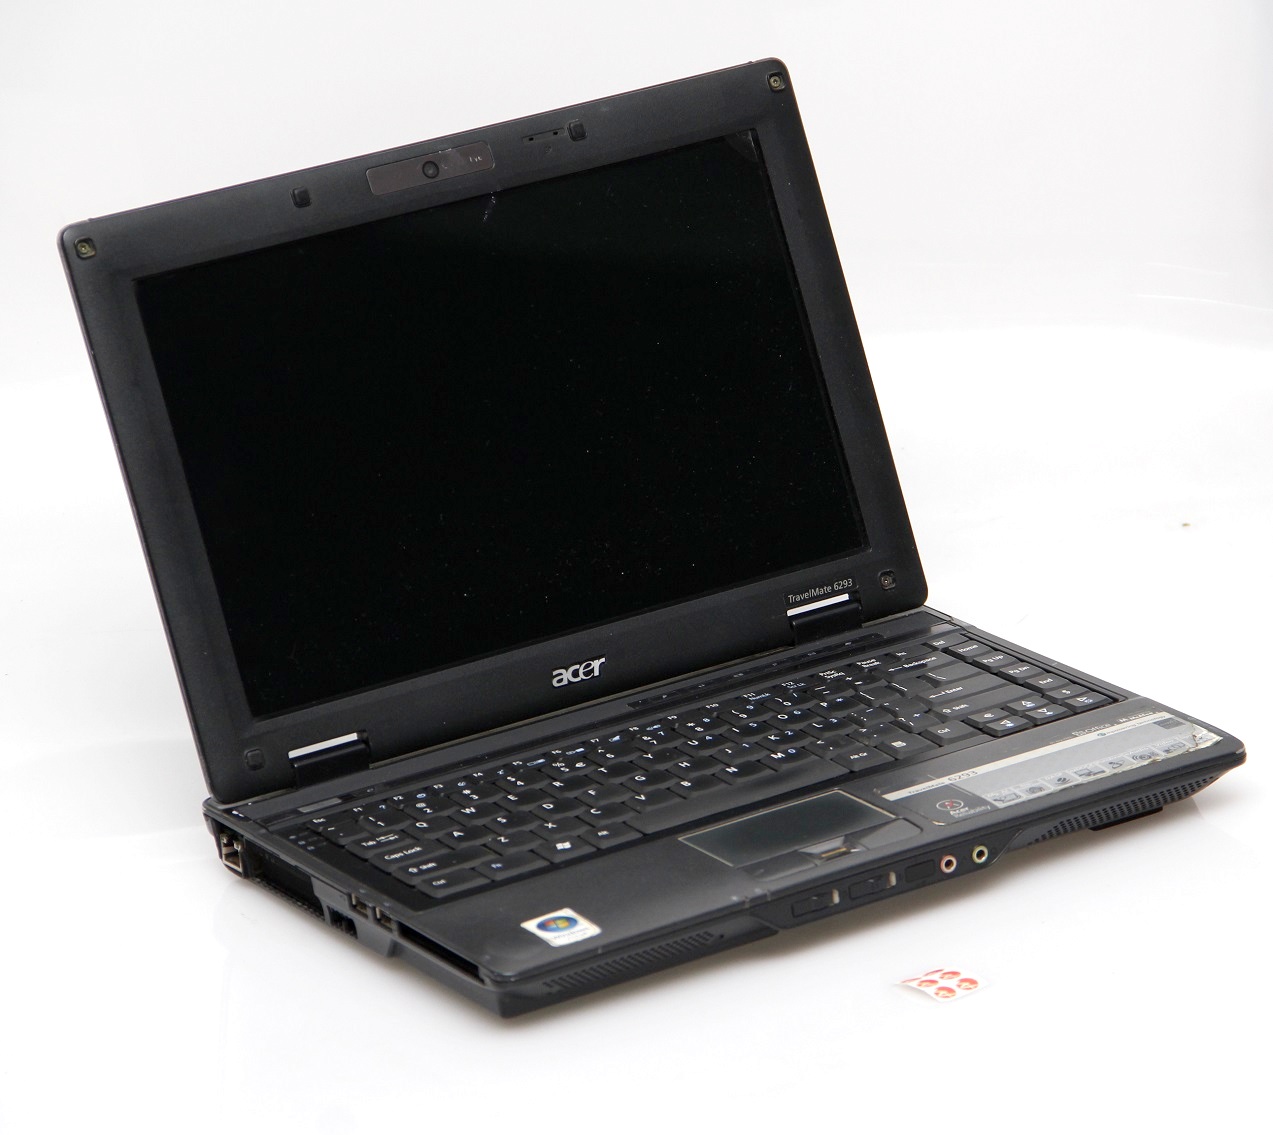 Jual Laptop Acer Travelmate 6293  Jual Beli Laptop Second 